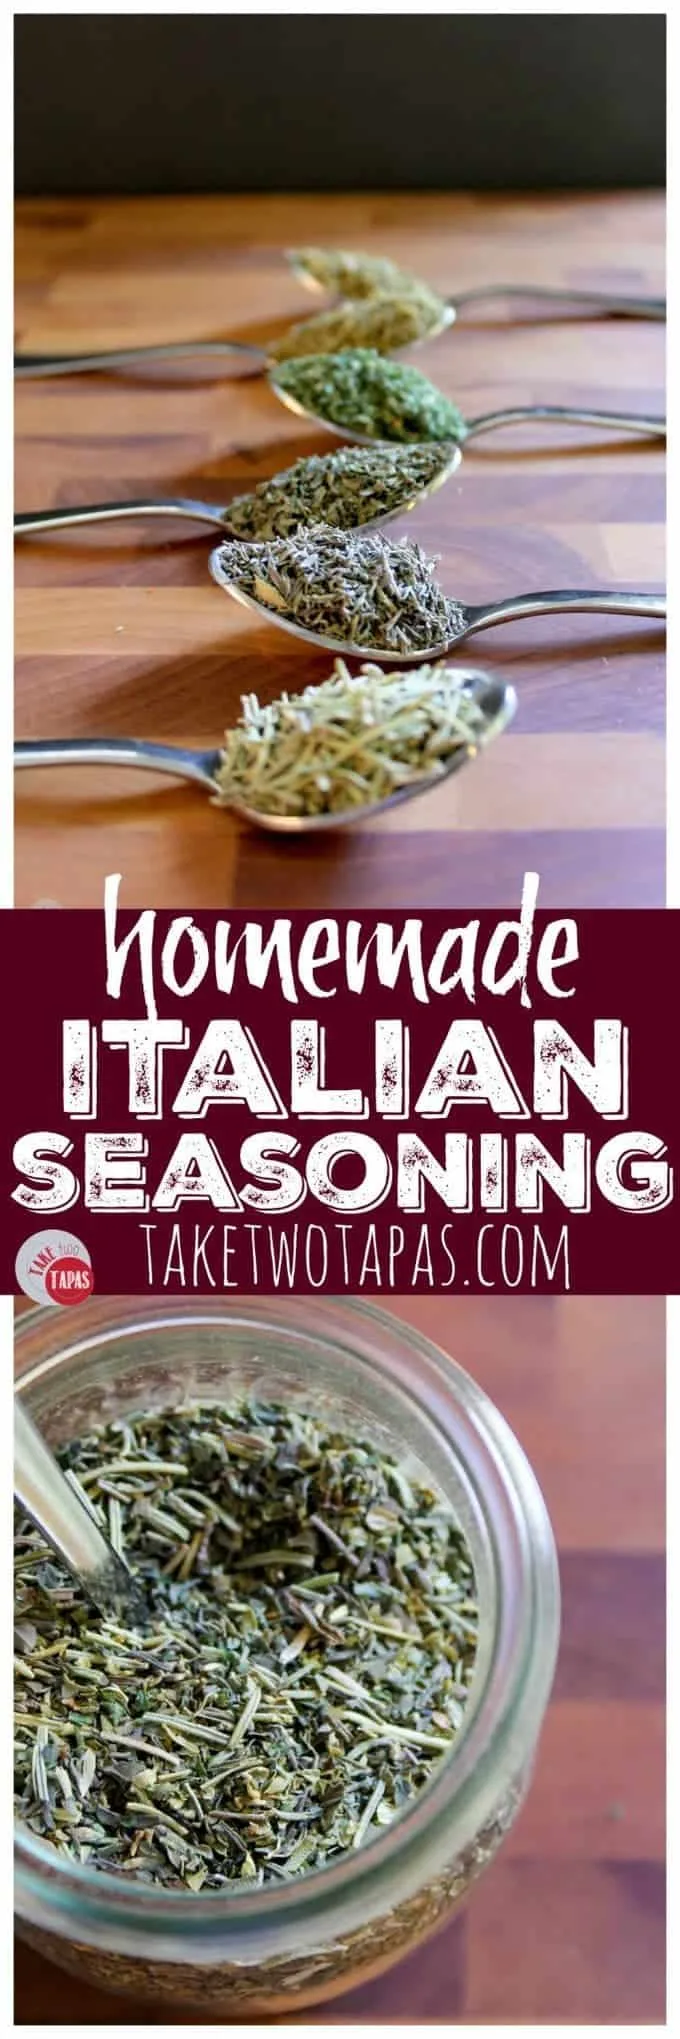 https://www.taketwotapas.com/wp-content/uploads/2017/02/Homemade-Italian-Seasoning-Mix-Pinterest-Long.jpg.webp